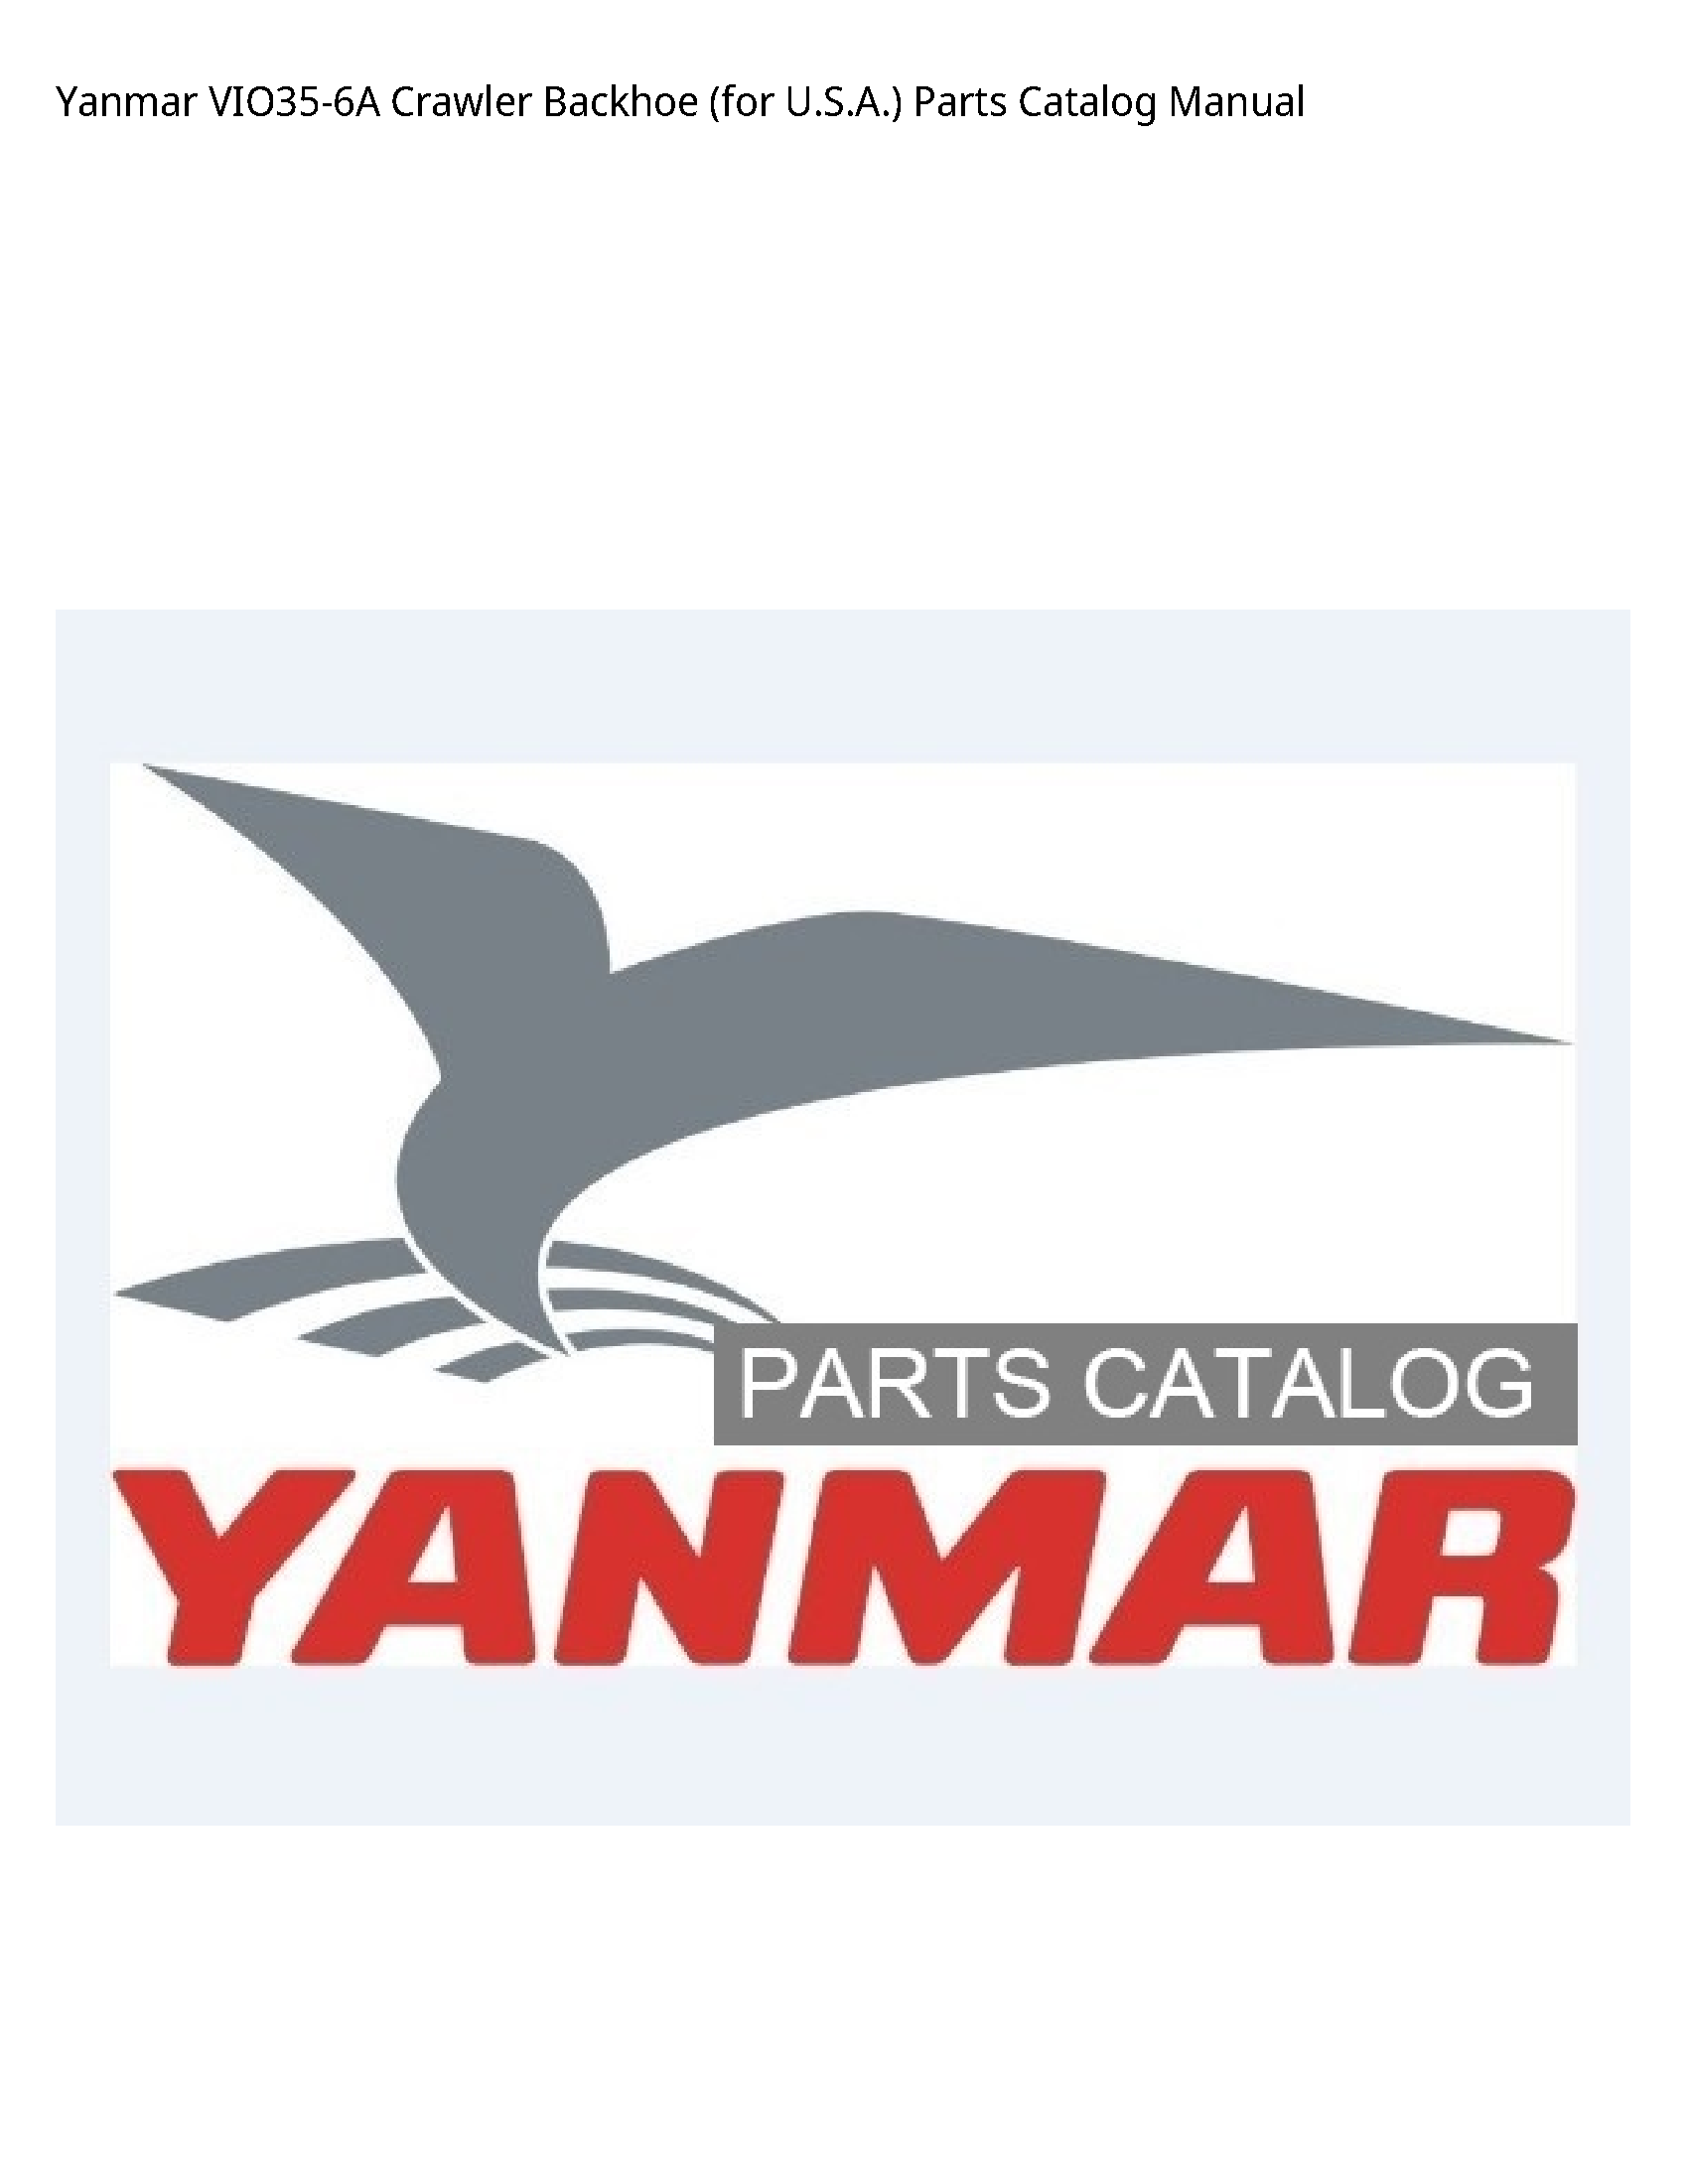 Yanmar VIO35-6A Crawler Backhoe (for U.S.A.) Parts Catalog manual